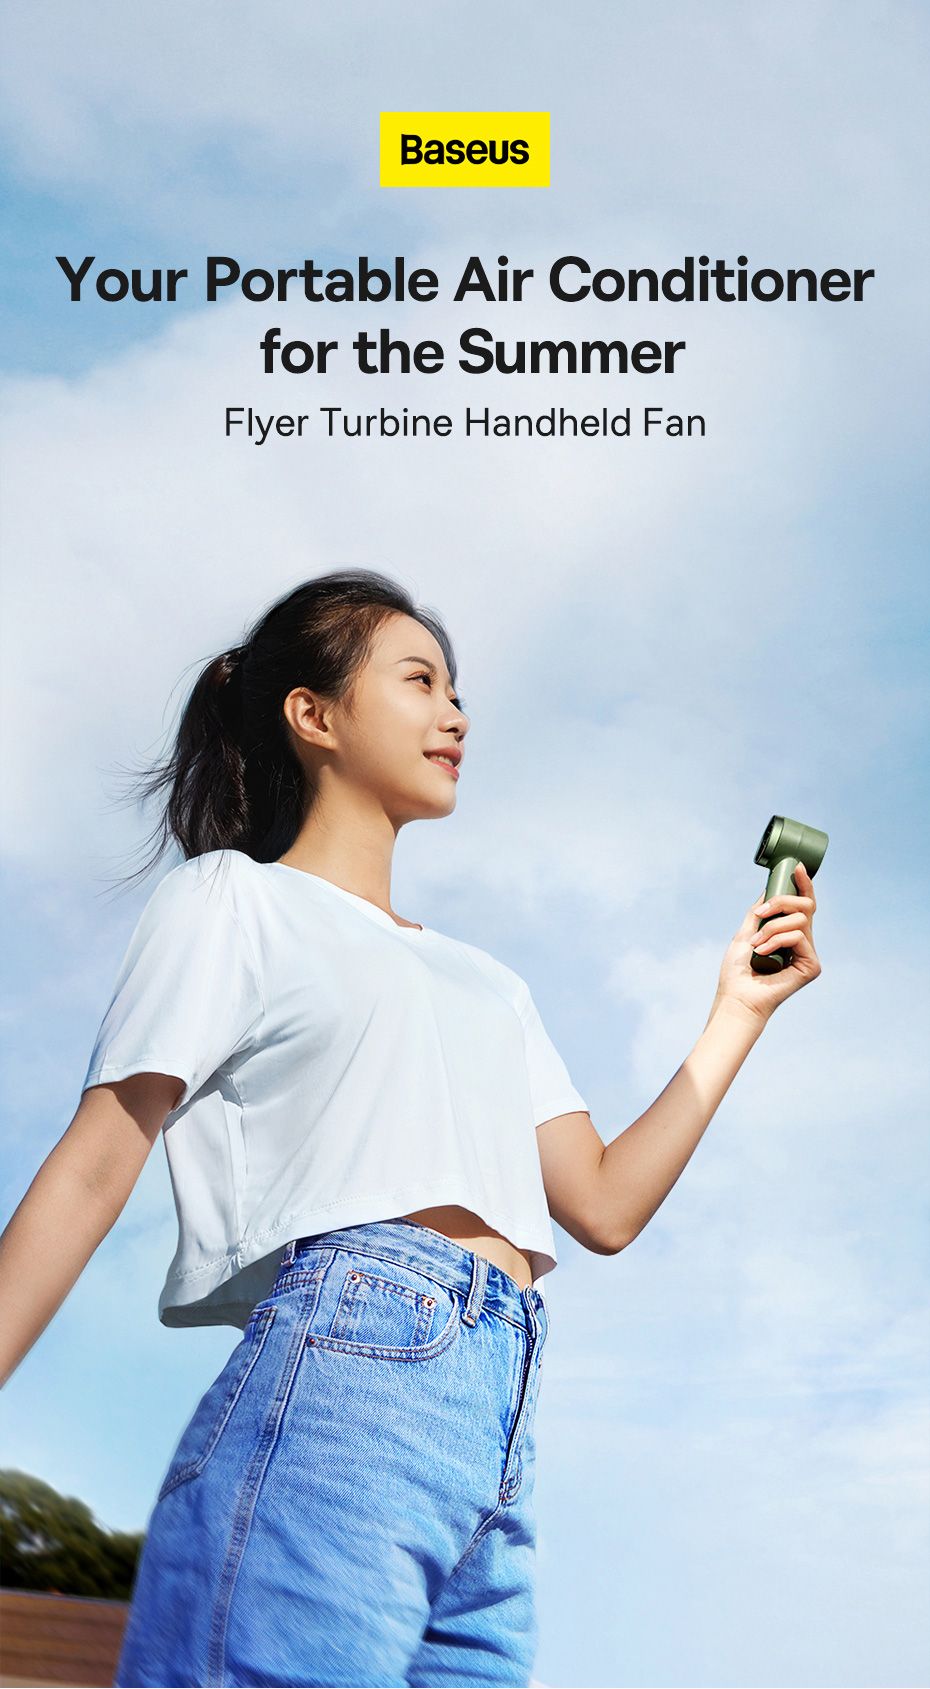 Baseus Flyer Turbine Handheld Fan With 4000mAh Power Bank